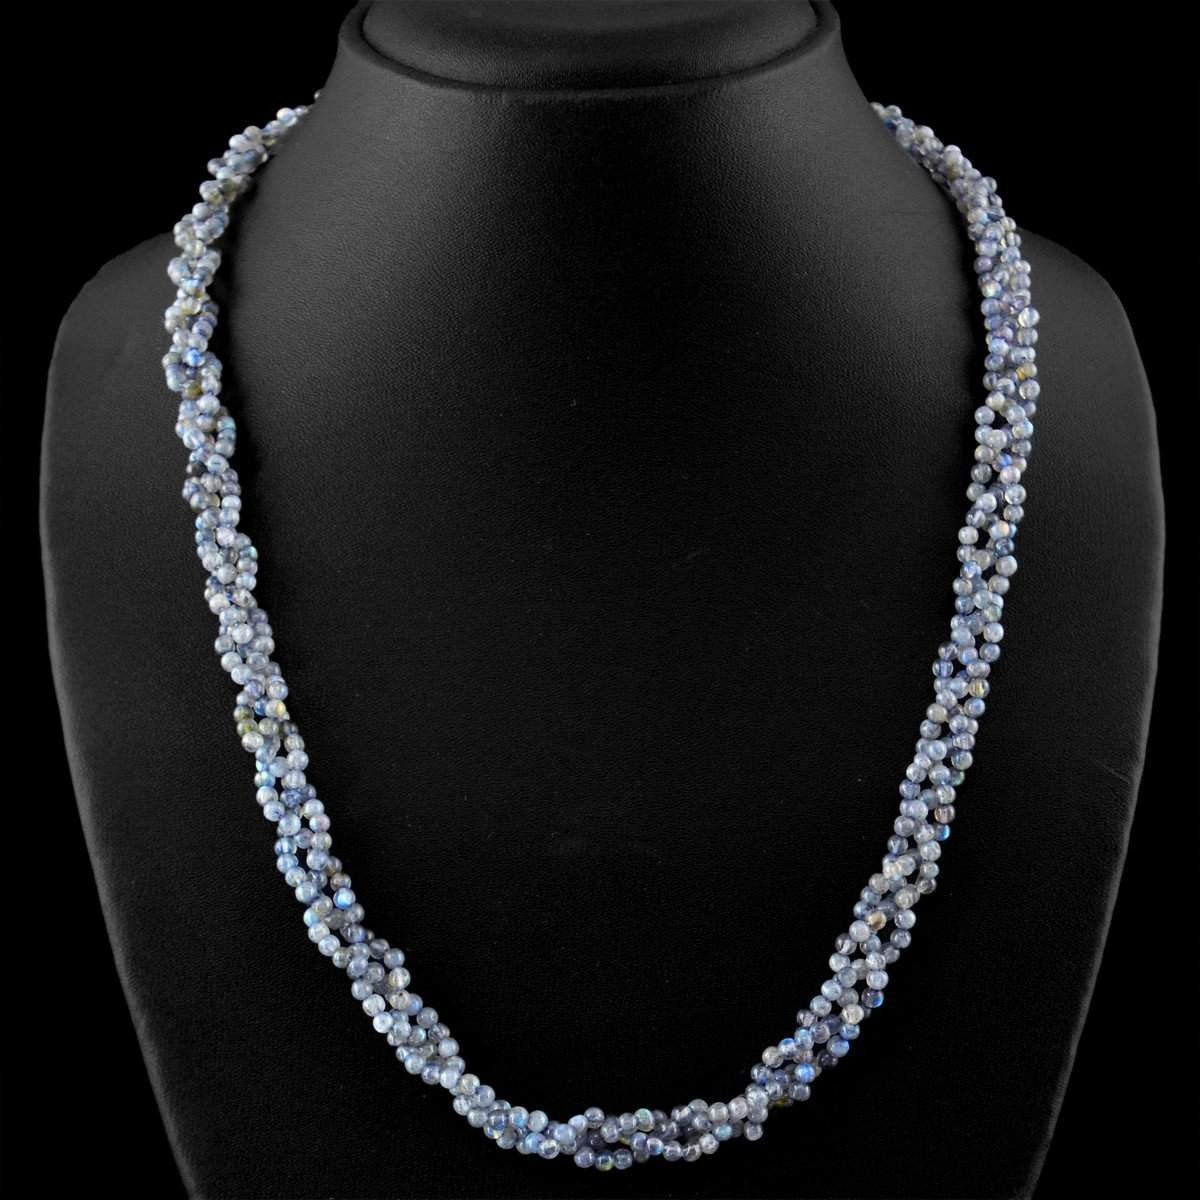 gemsmore:Untreated Natural Blue Flash Labradorite Necklace Round Shape Beads